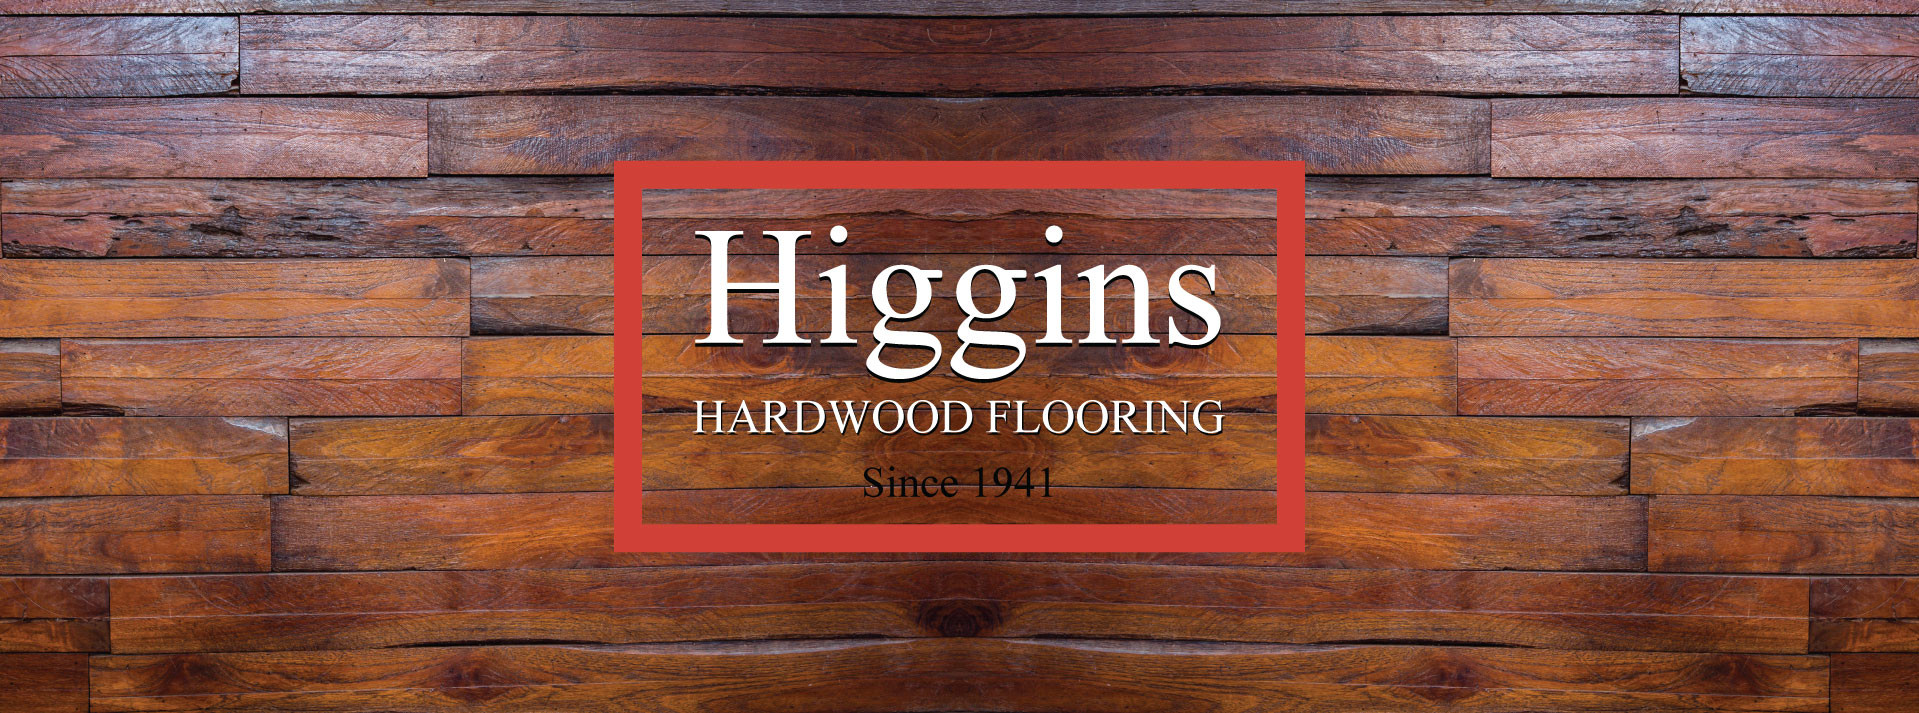 29 Stylish Hardwood Flooring Jobs toronto 2024 free download hardwood flooring jobs toronto of higgins hardwood flooring in peterborough oshawa lindsay ajax throughout office hours